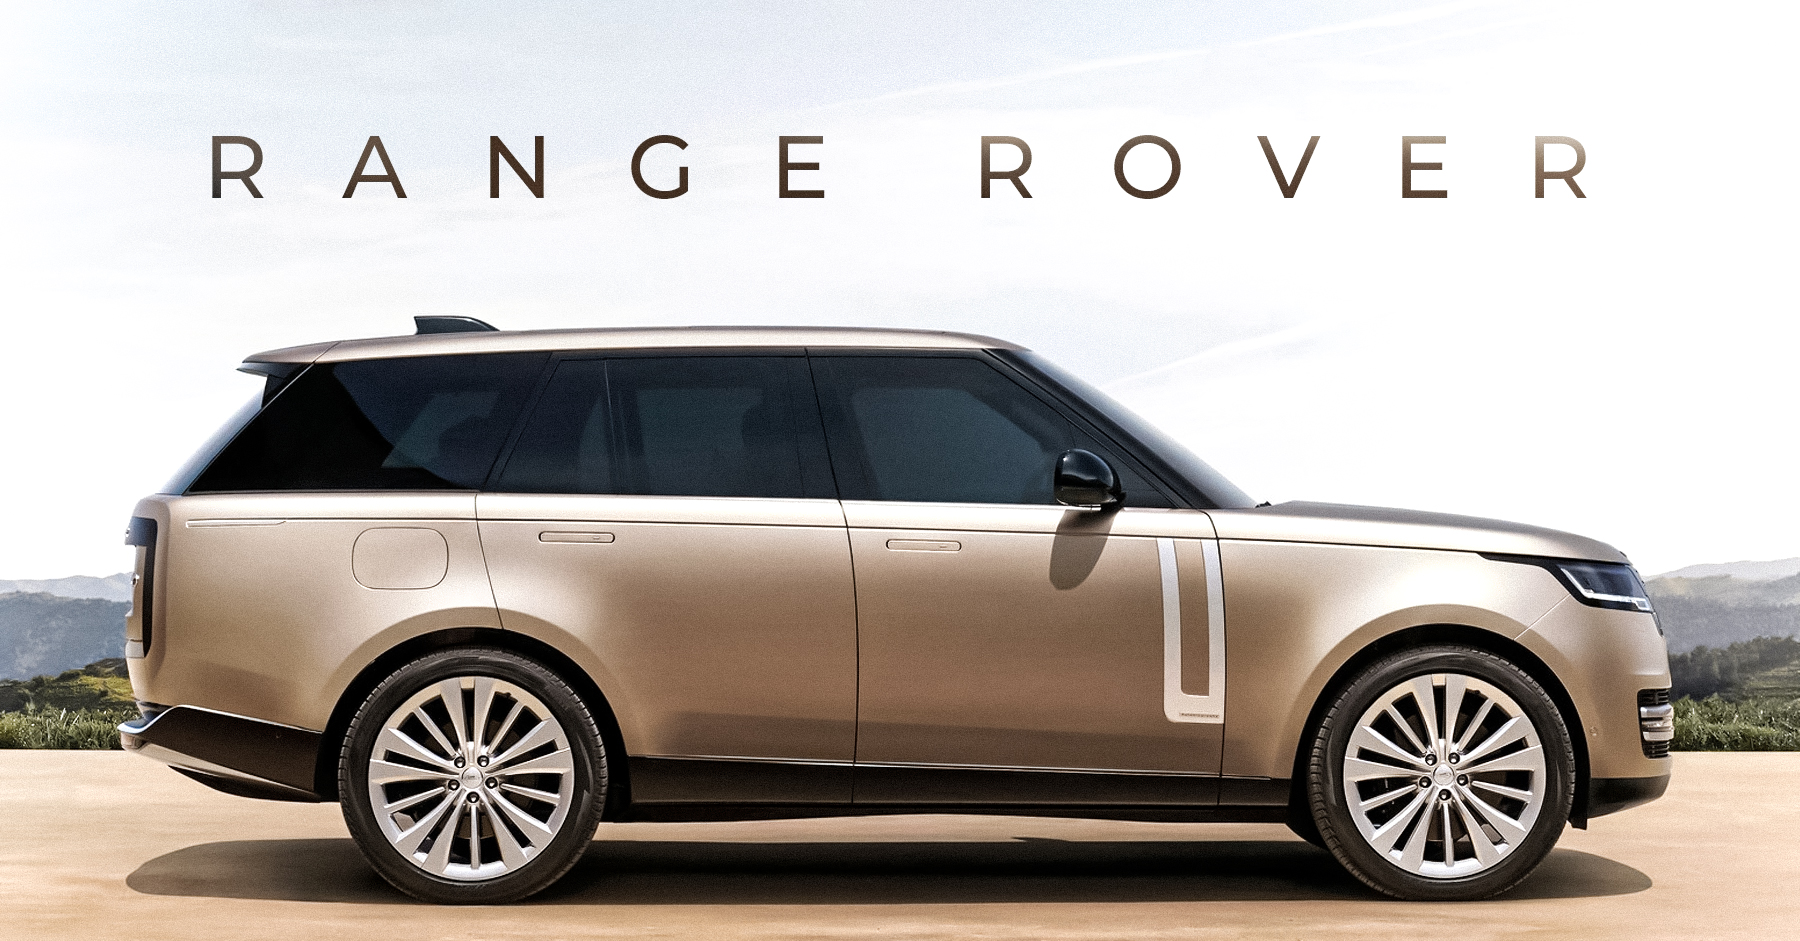 New Land Rover Range Rover facelift